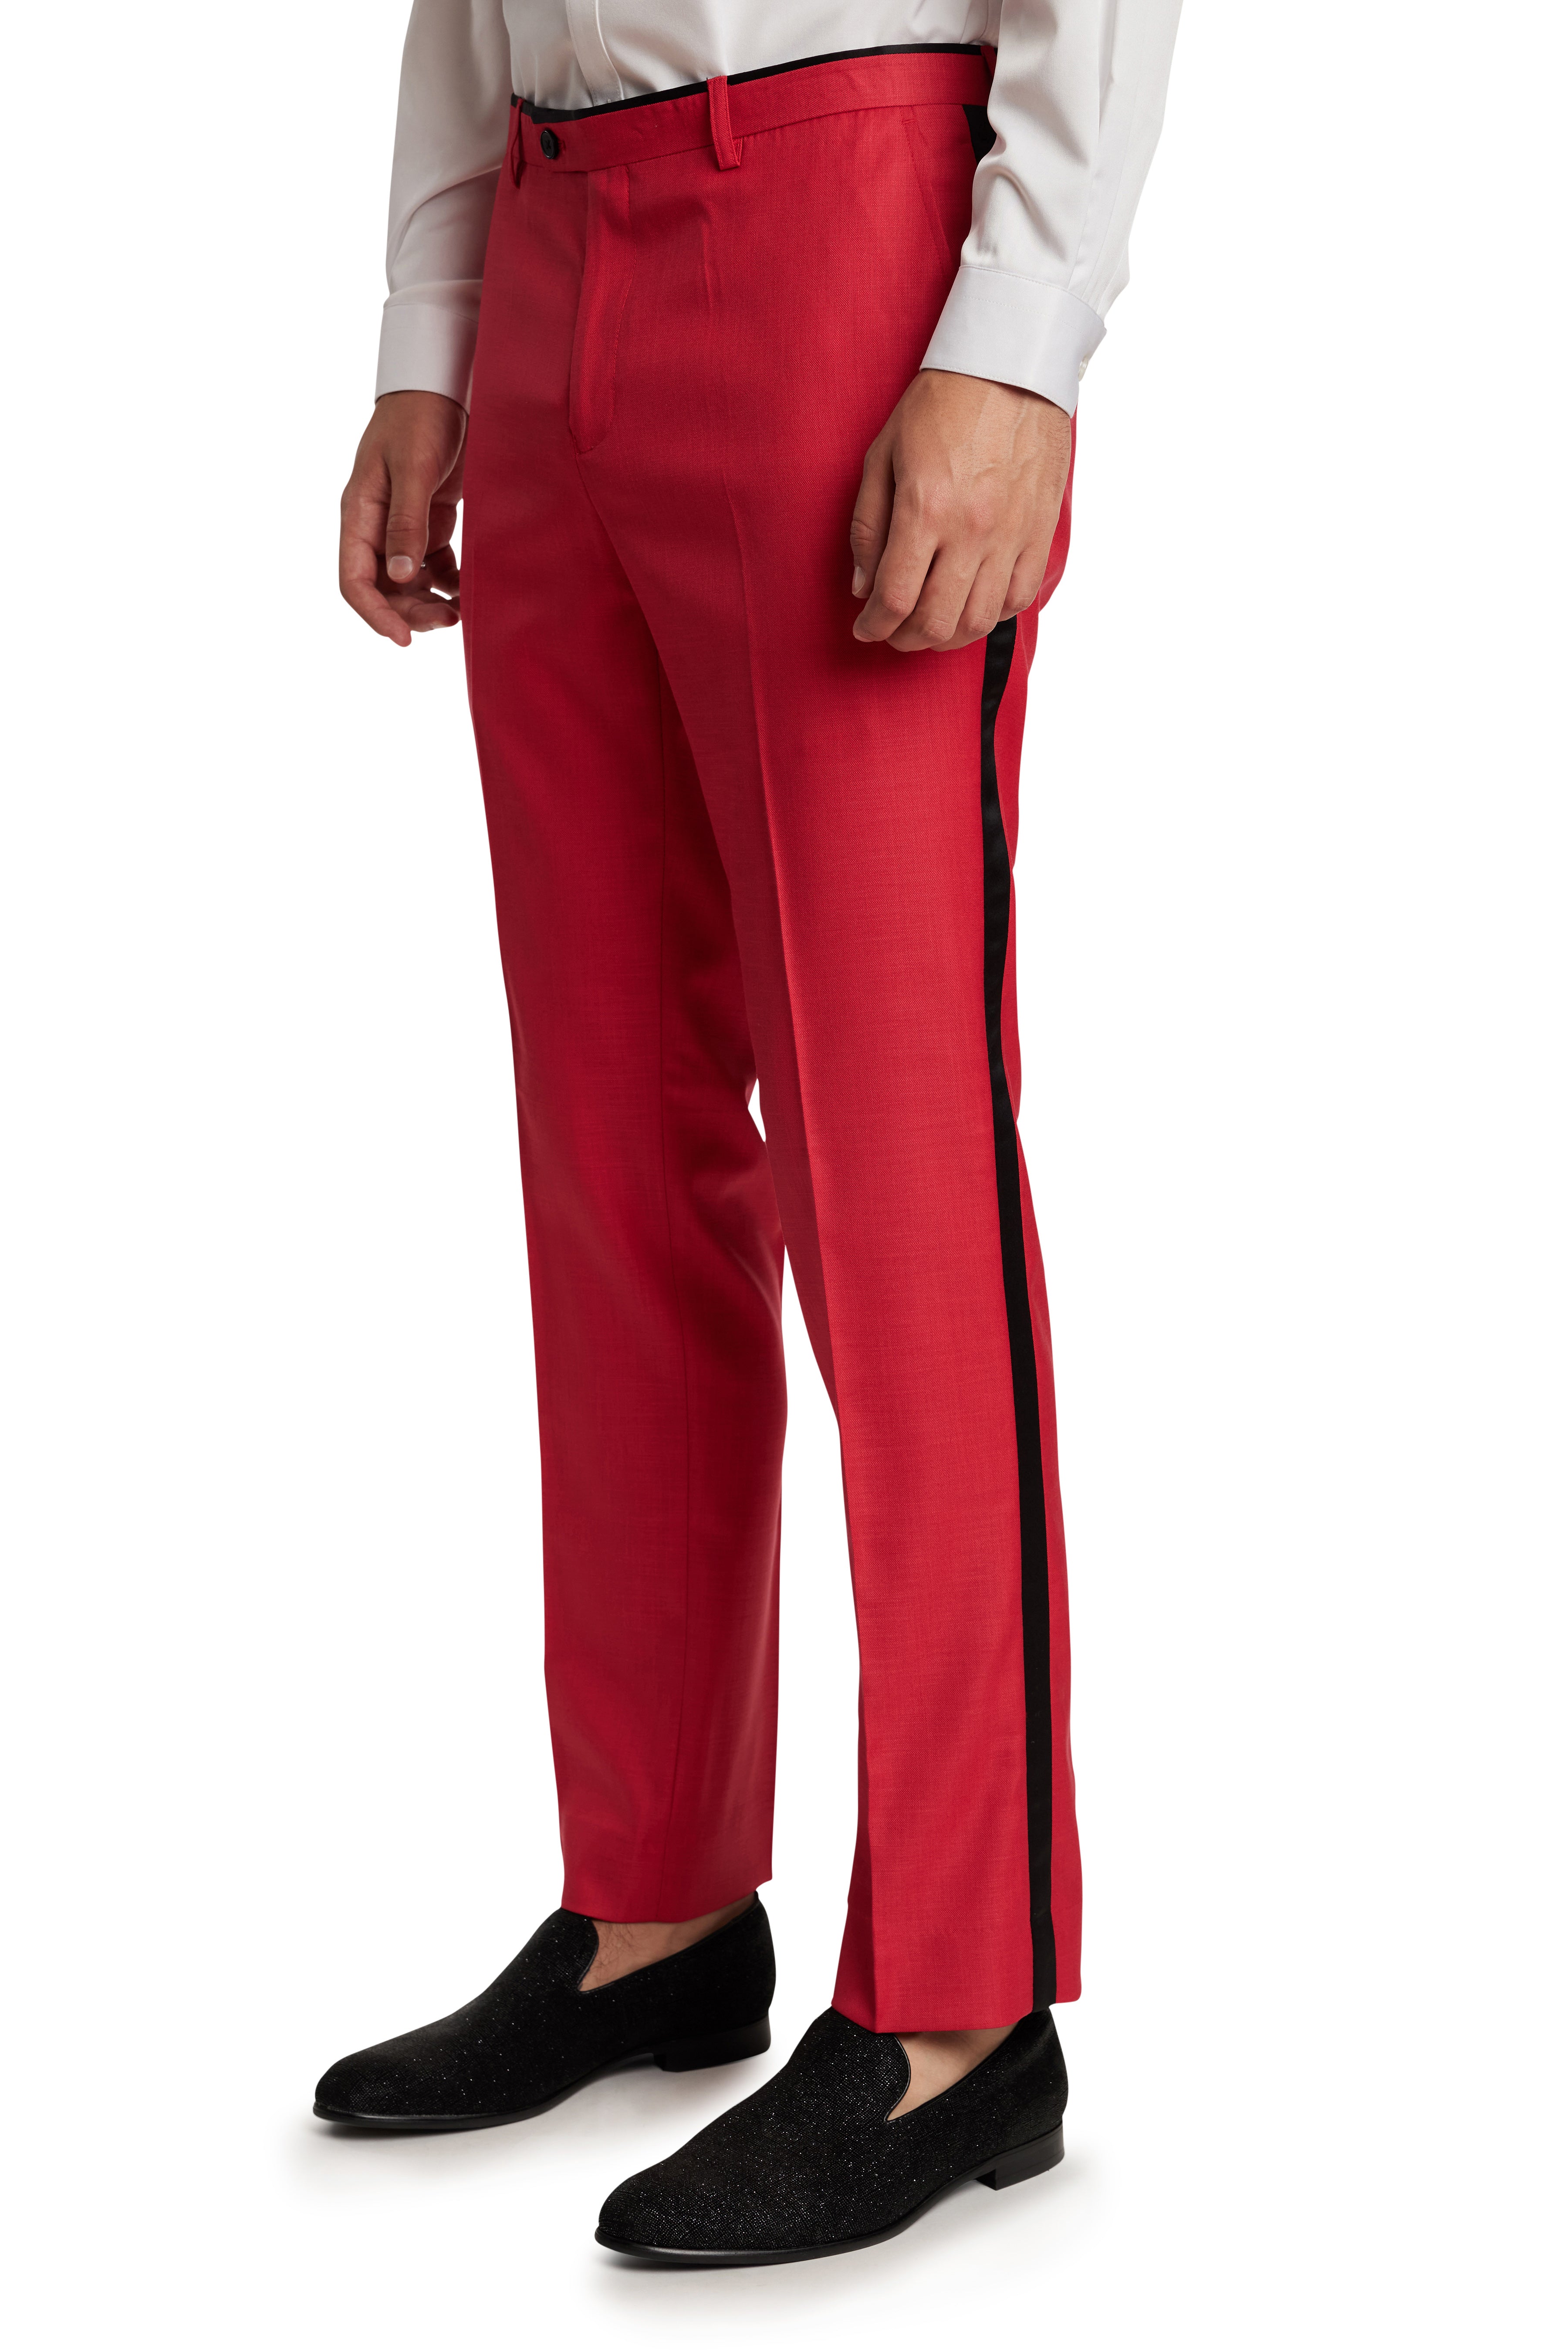 2 Piece Men Suit Red Blazer Black Pants Formal Prom Groom Tuxedos Wedding  Suit  eBay